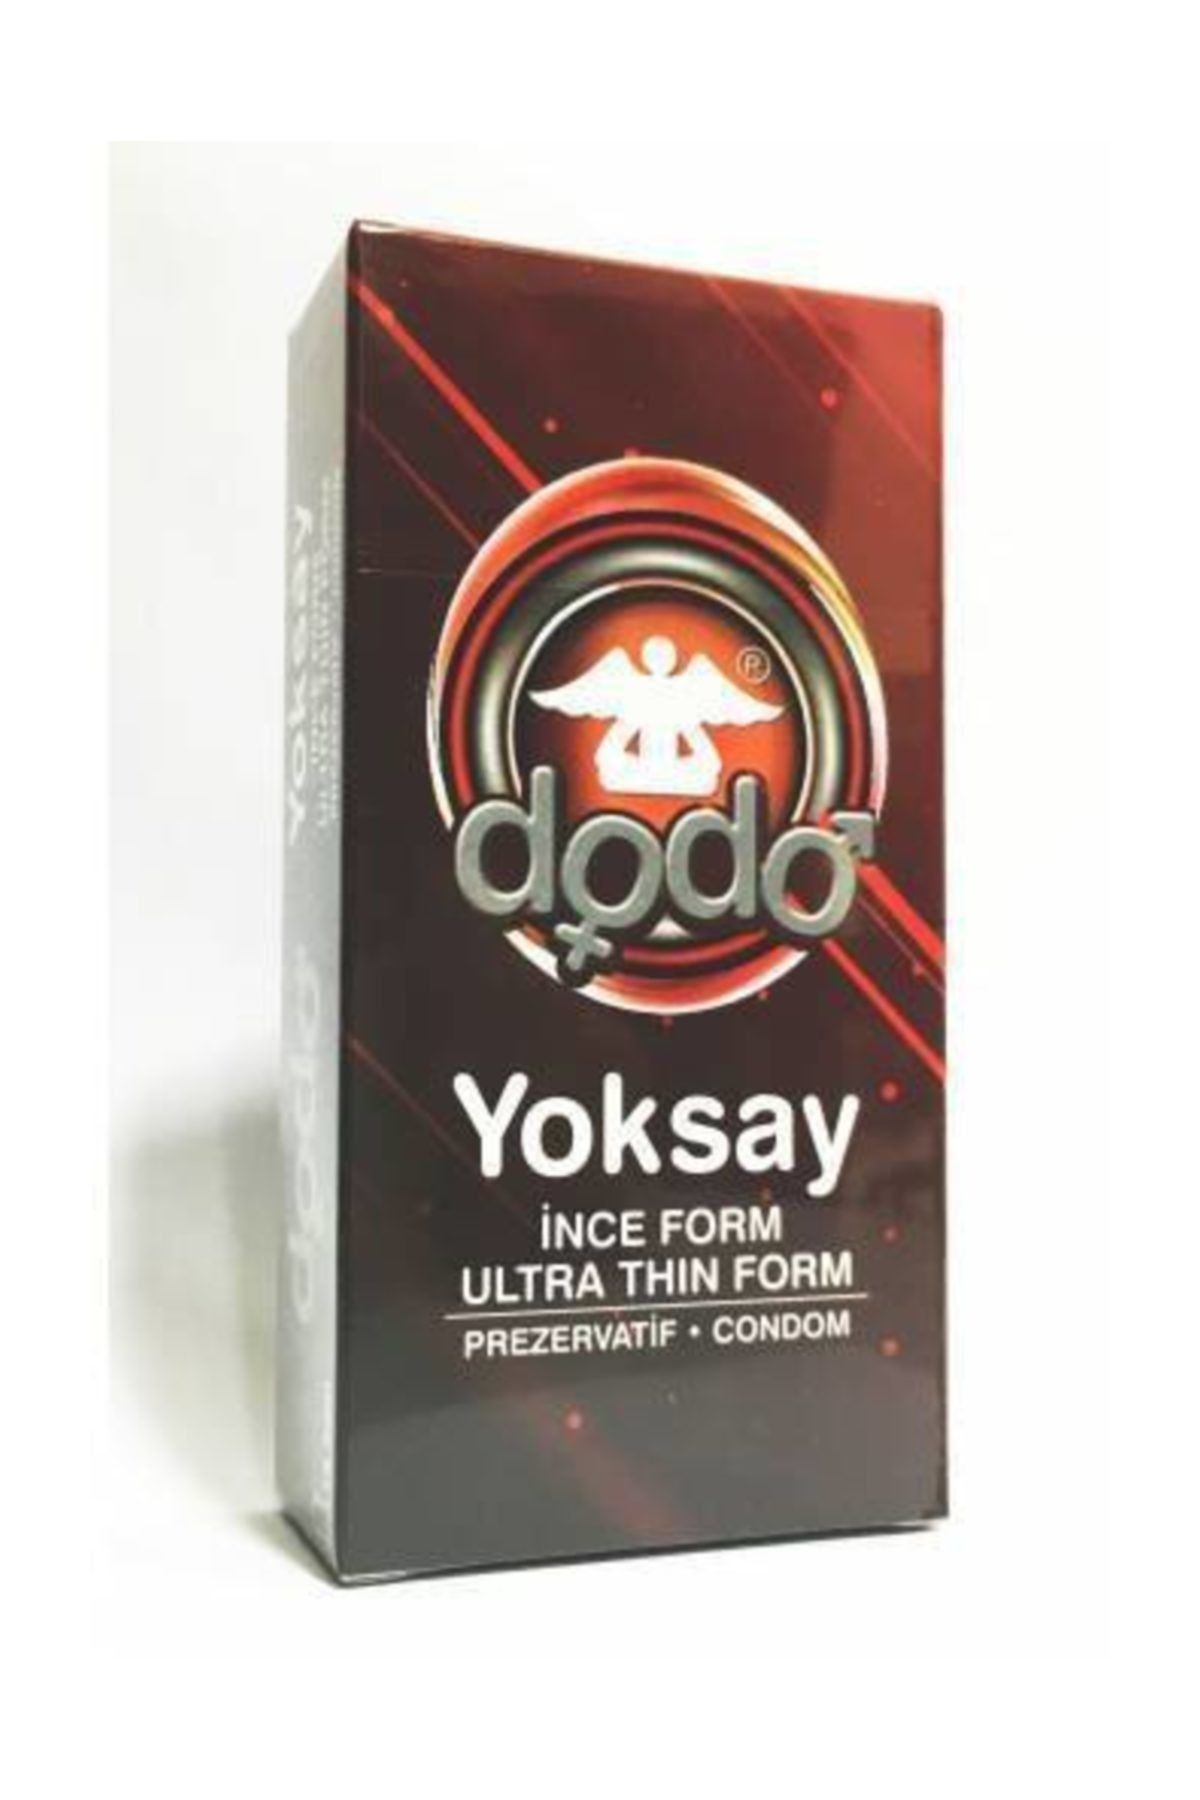 Dodo Prezervatif Yoksay Ince Form 12'li Paket Kondom Bna-dod-y1